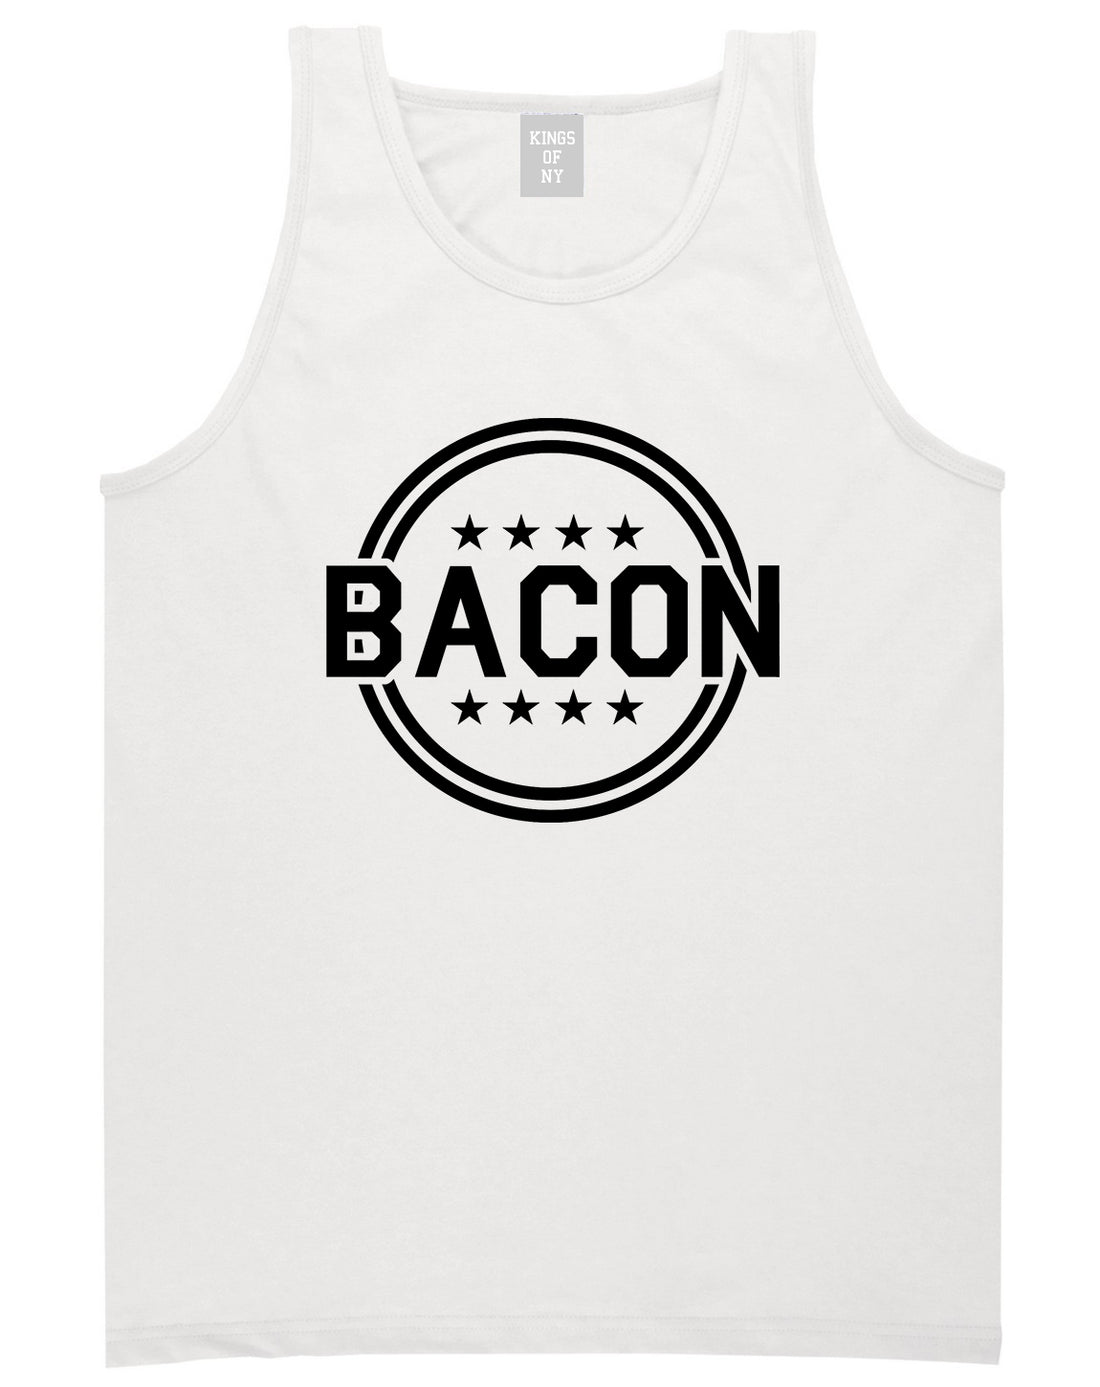 Bacon Stars White Tank Top Shirt by Kings Of NY